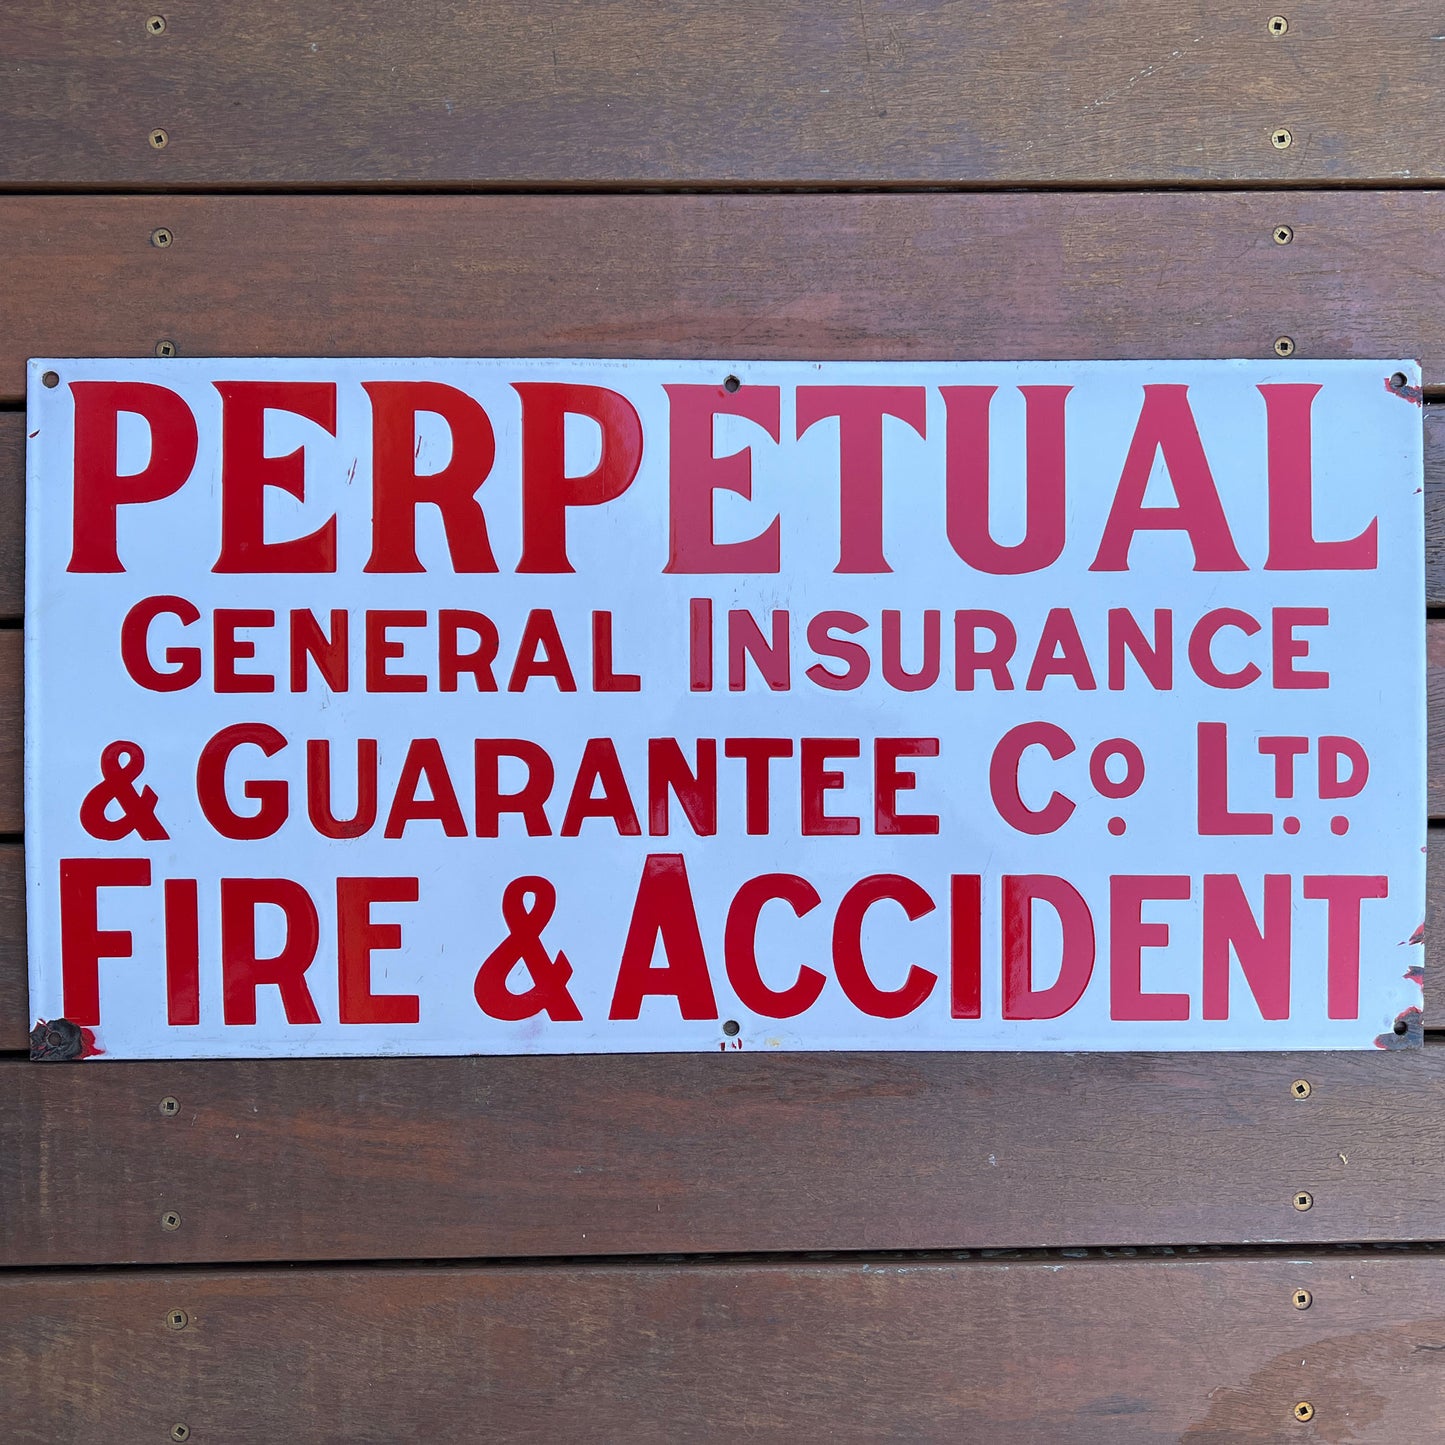 Perpetual General Insurance Guarantee Fire & Accident Enamel Sign